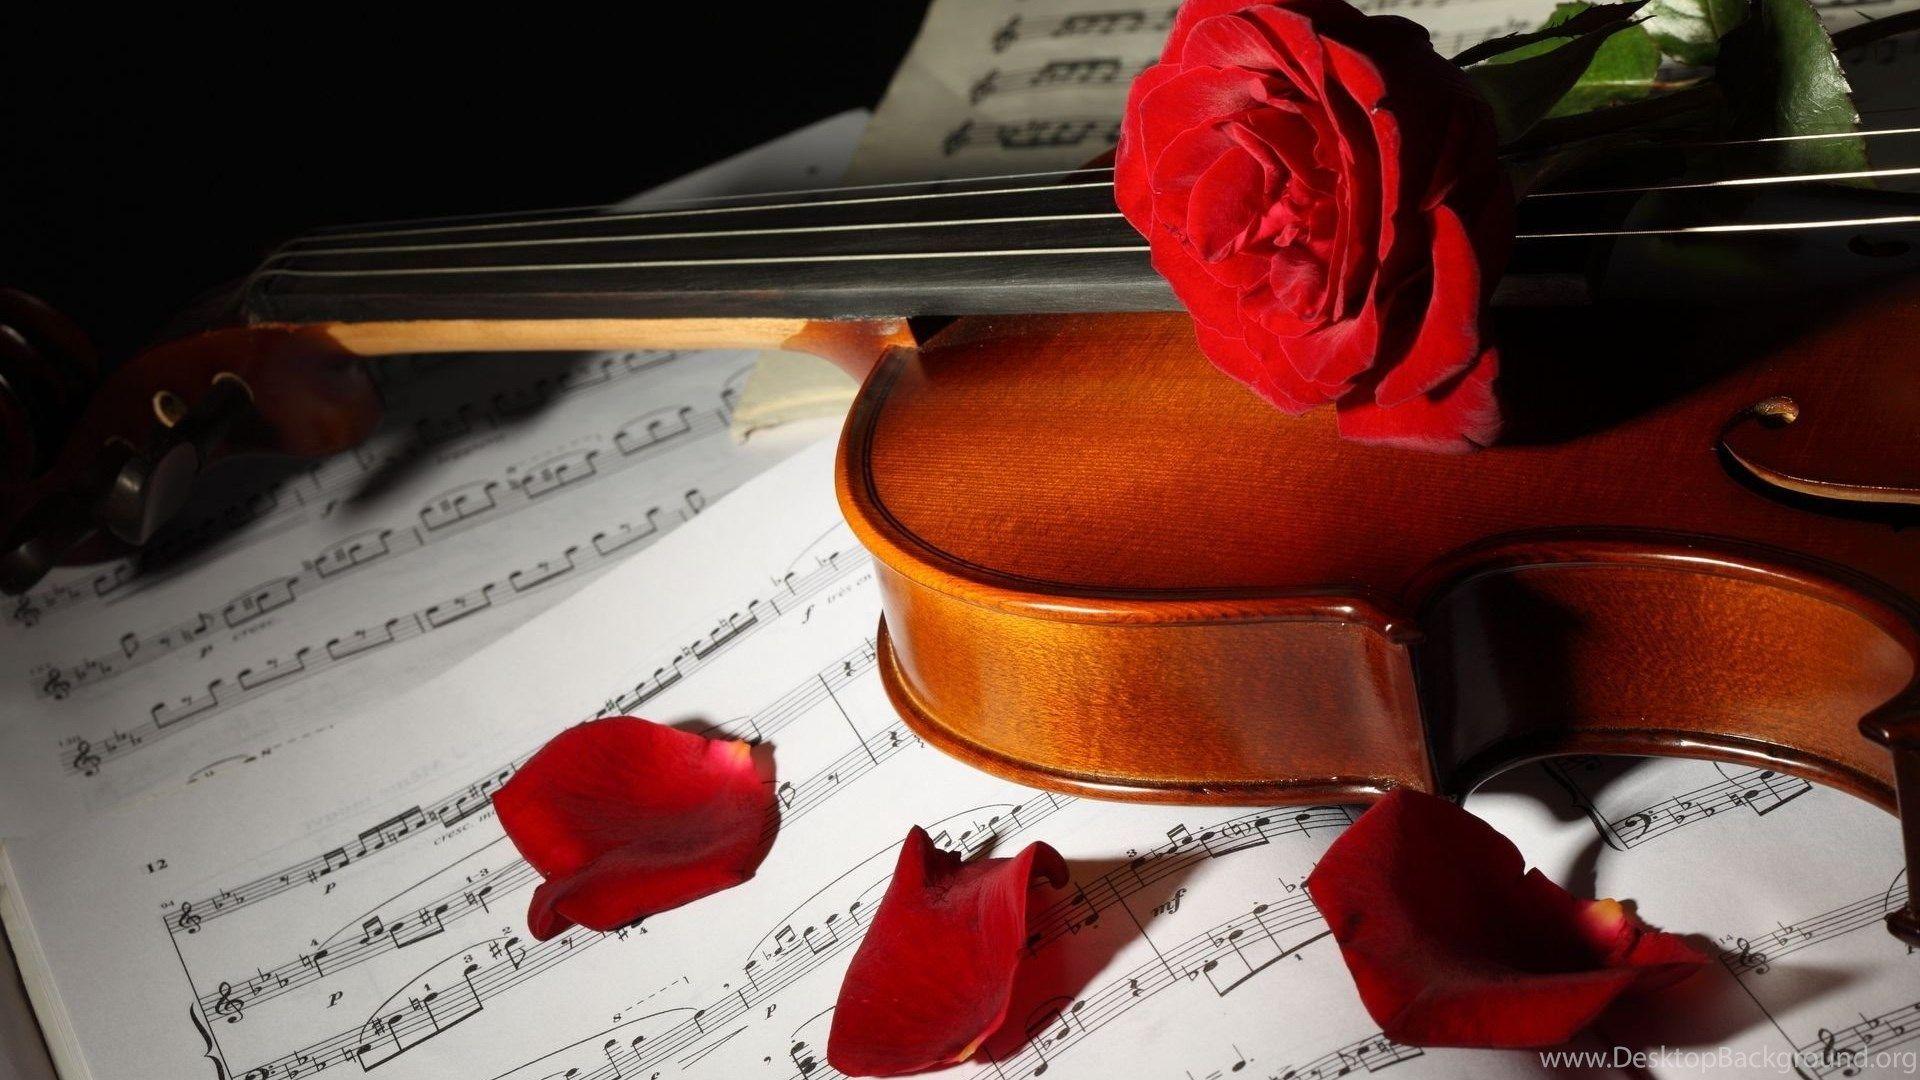 Violin Roses Wallpapers - Top Free Violin Roses Backgrounds ...